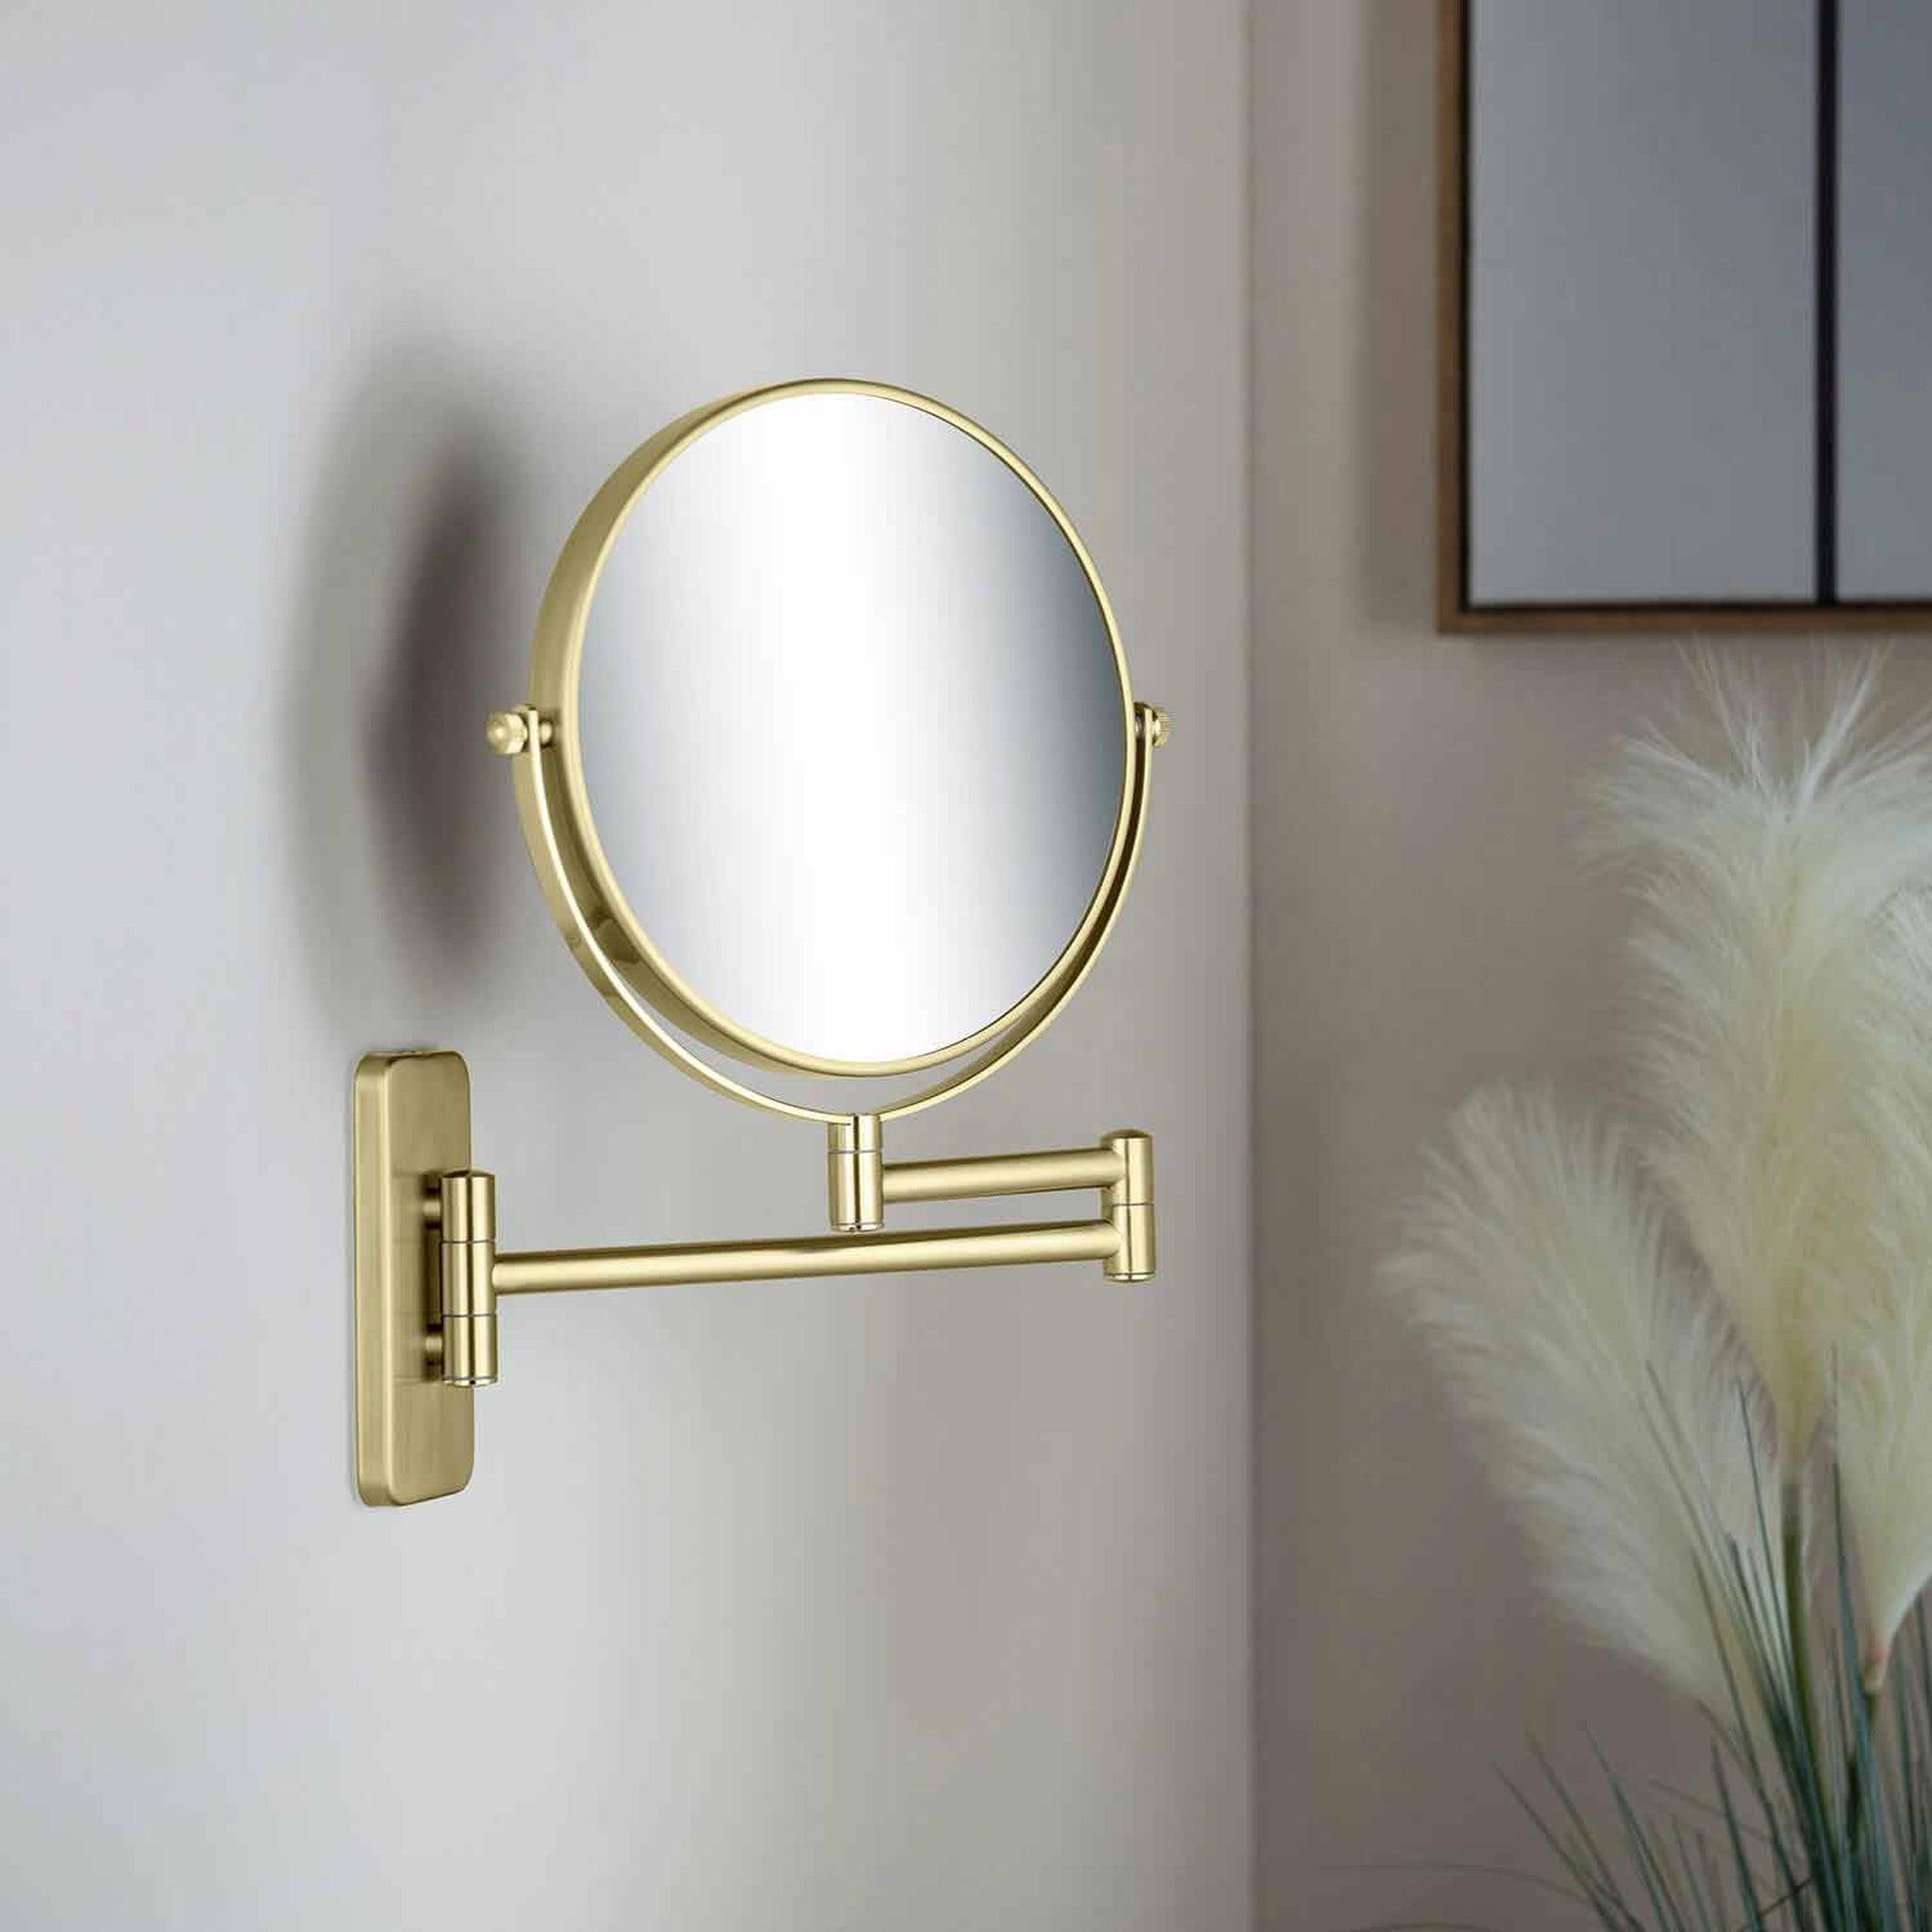 KIBI, KIBI Circular Brass Bathroom Magnifying Makeup Shaving Mirror in Brushed Gold Frame Finish